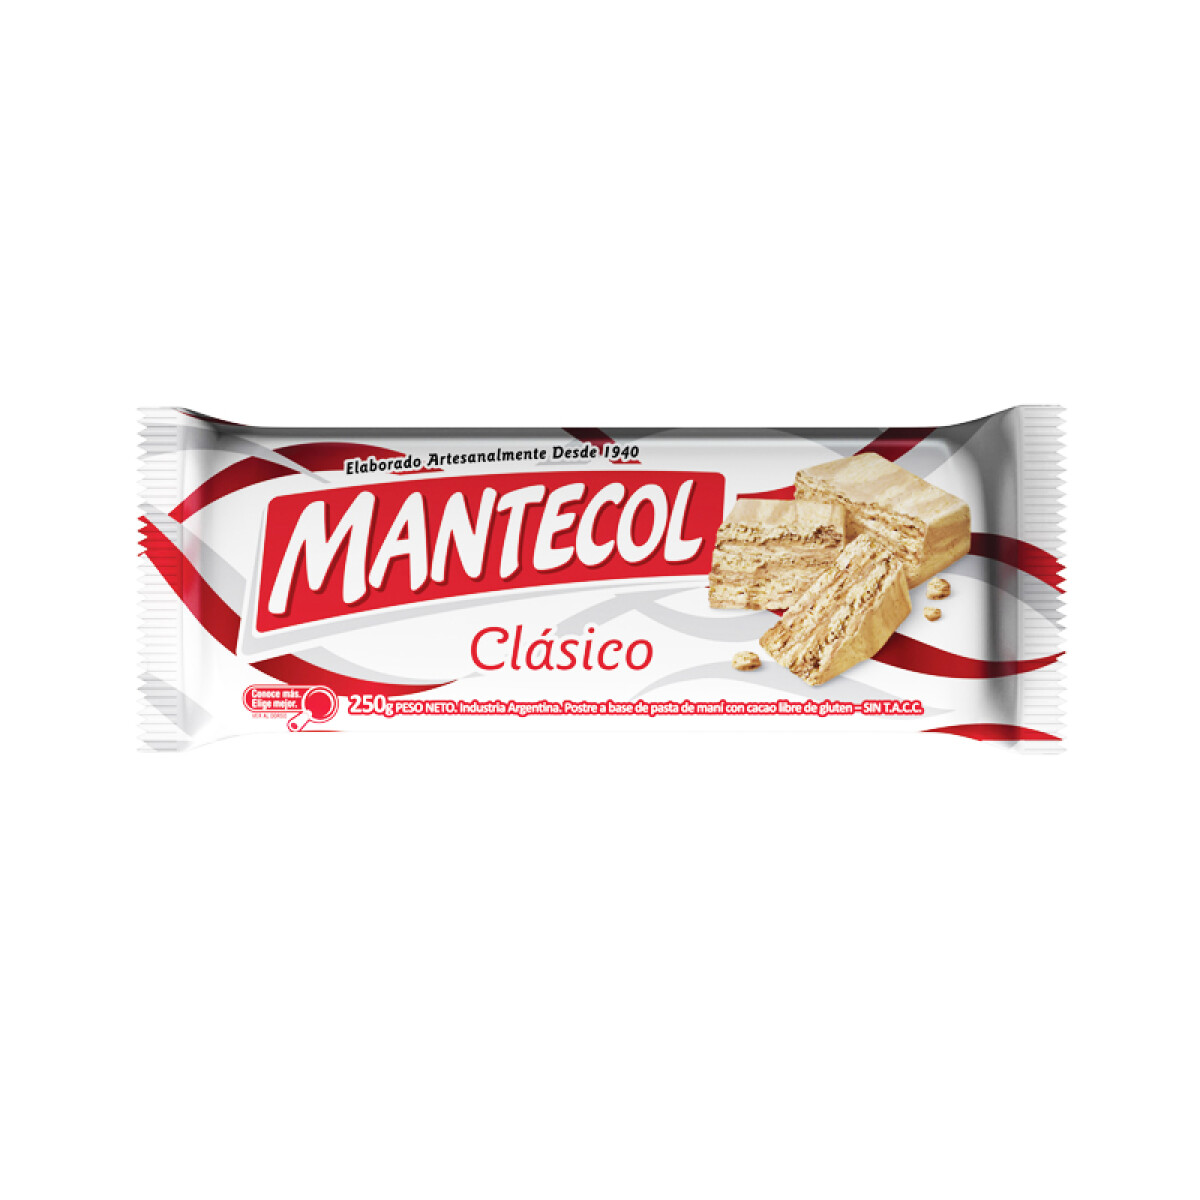 MANTECOL Clásico 250g 